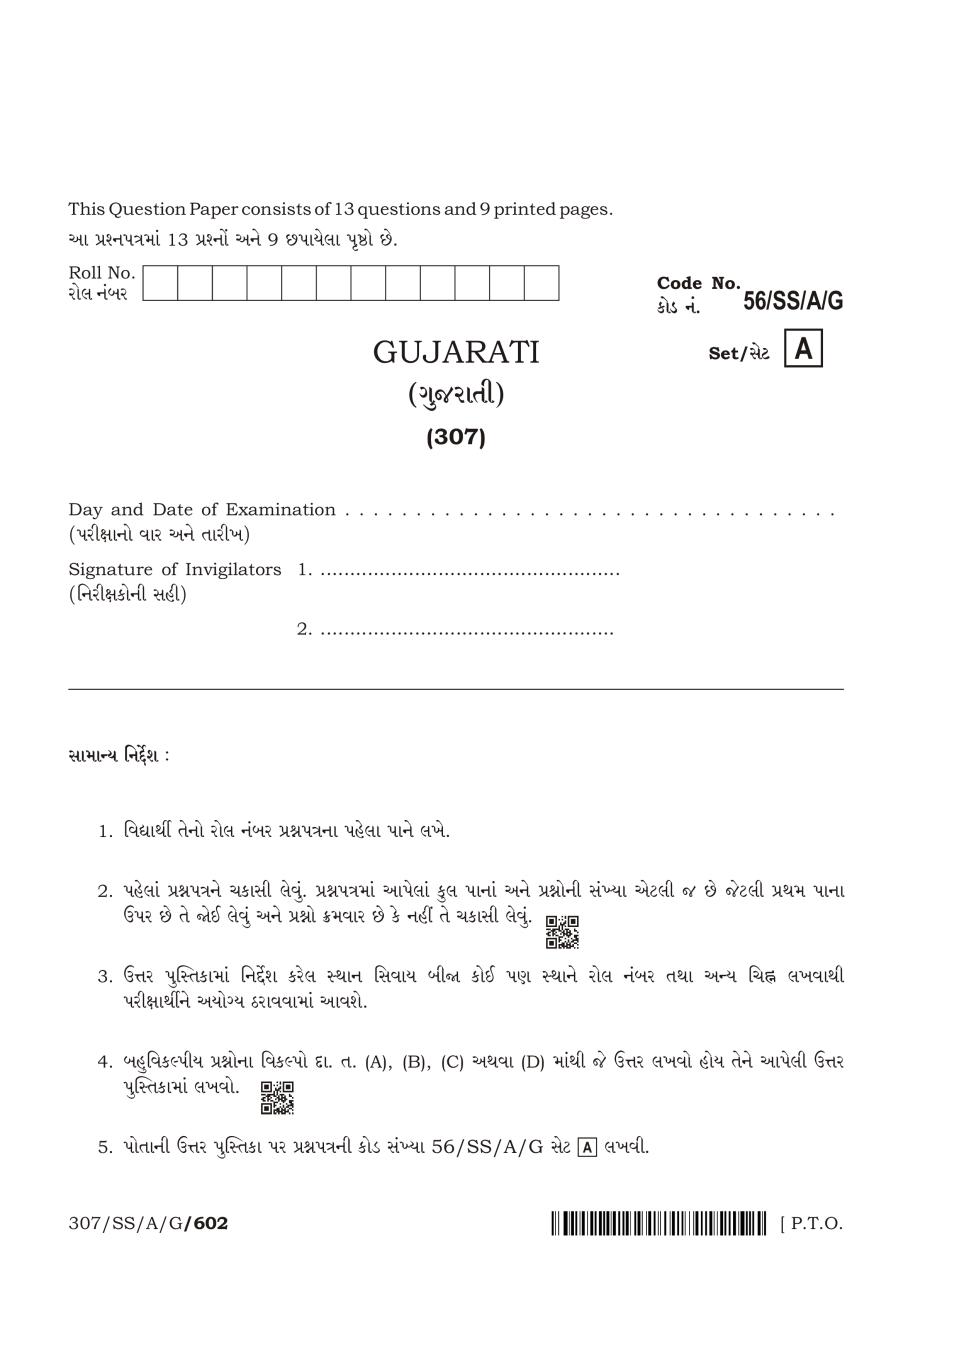 NIOS Class 12 Question Paper Apr 2018 - Gujarati - Page 1